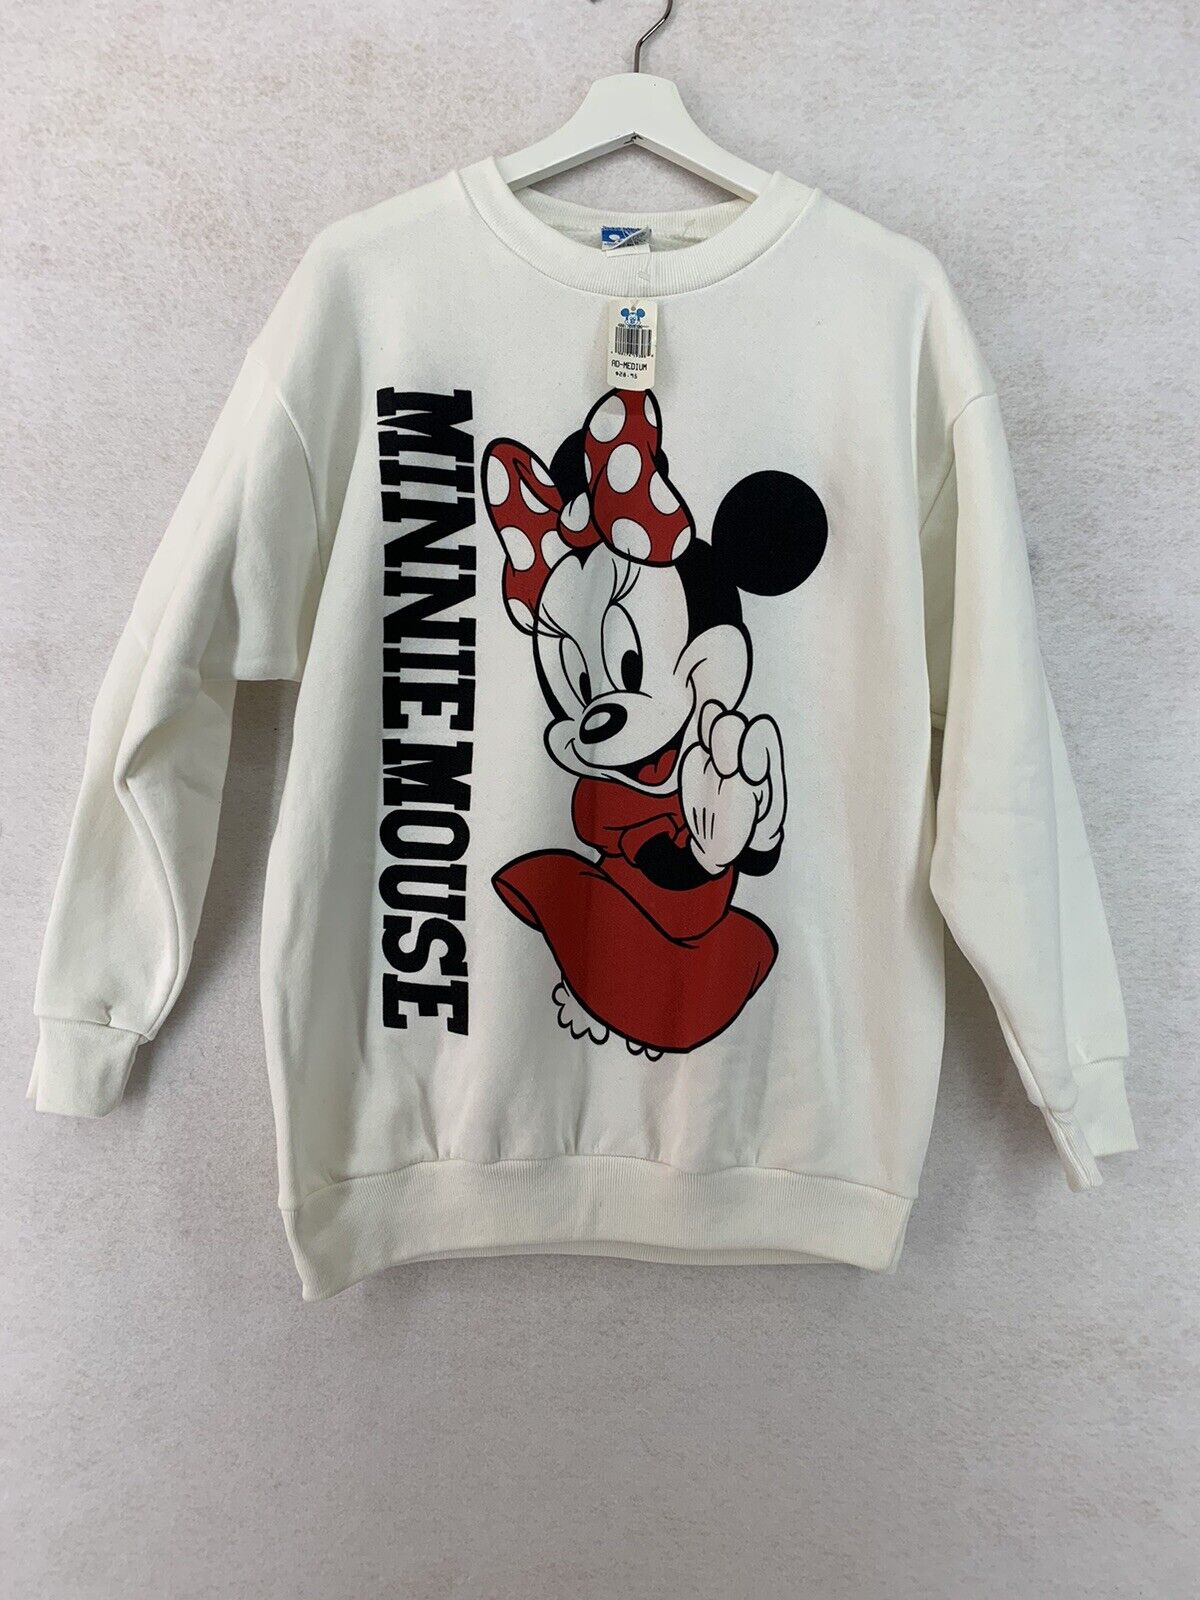 Vintage Disney Minnie Mouse Sweatshirt Crewneck Sz M White 90s Made In Usa